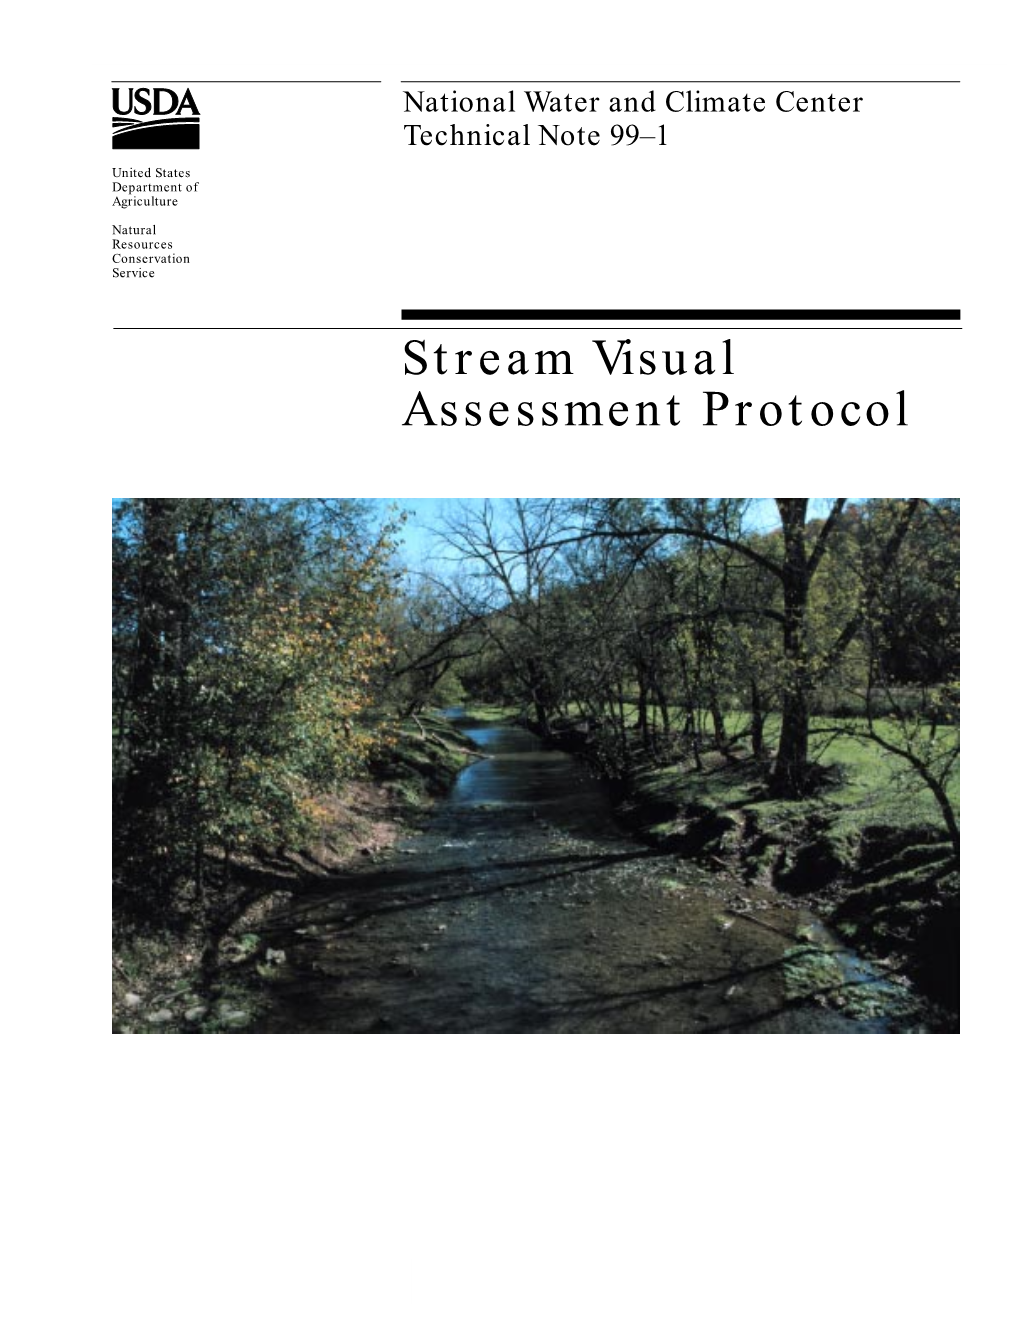 Stream Visual Assessment Protocol (SVAP)